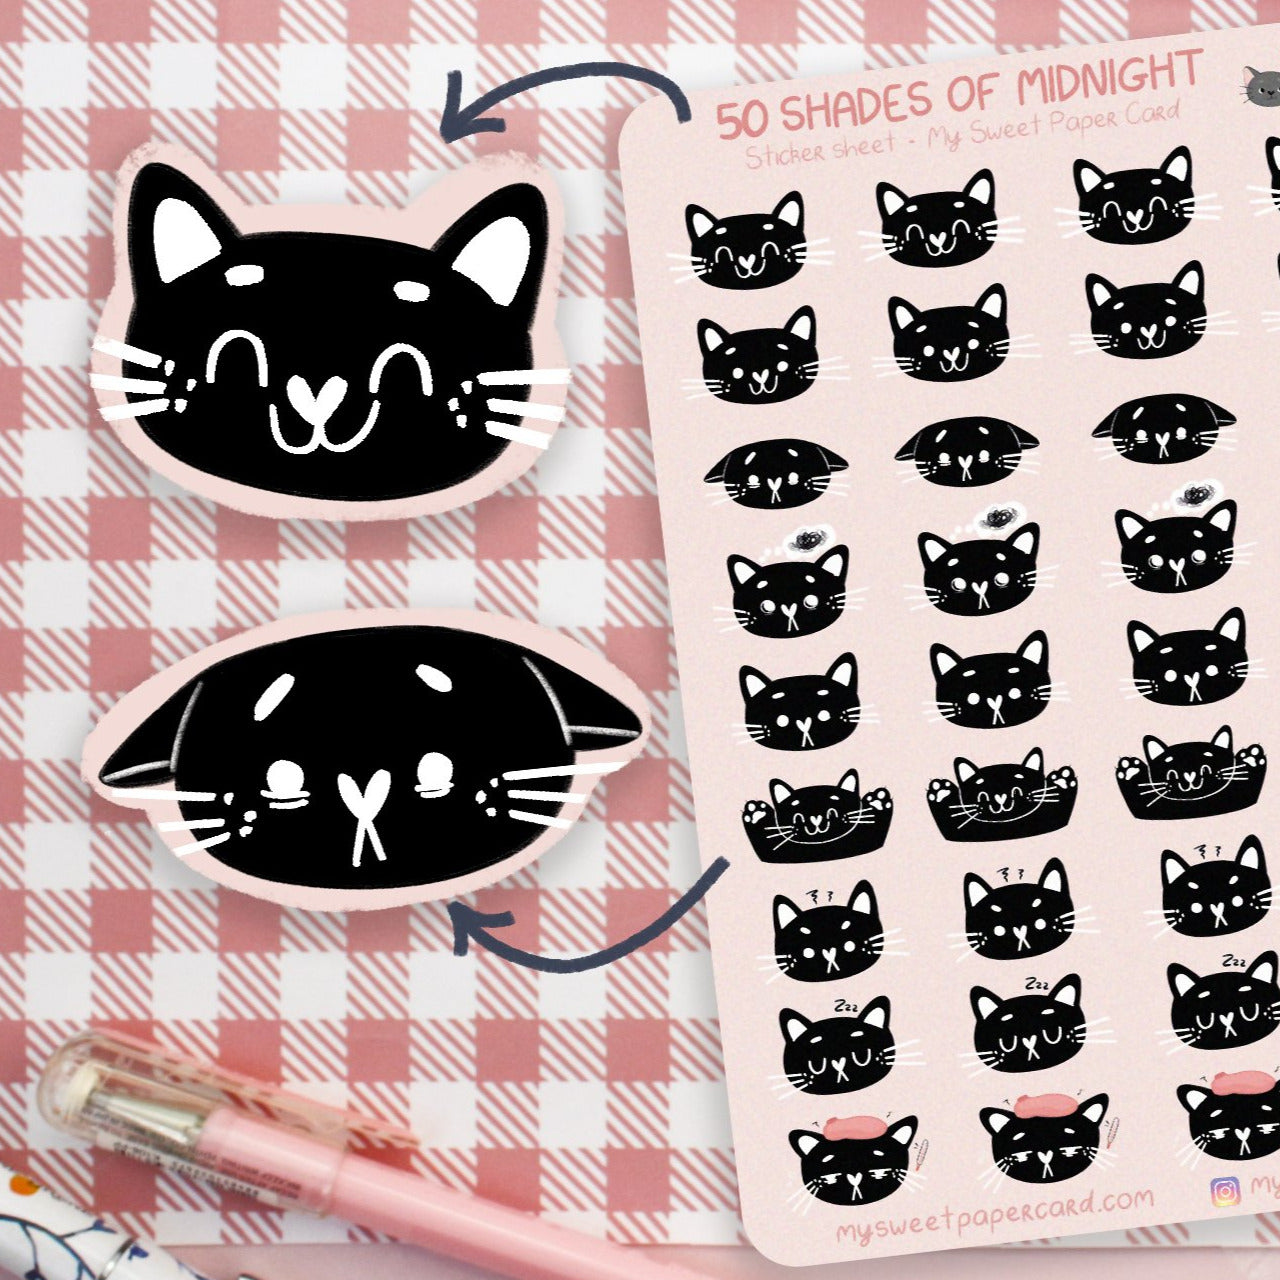 stickers of black cat moods